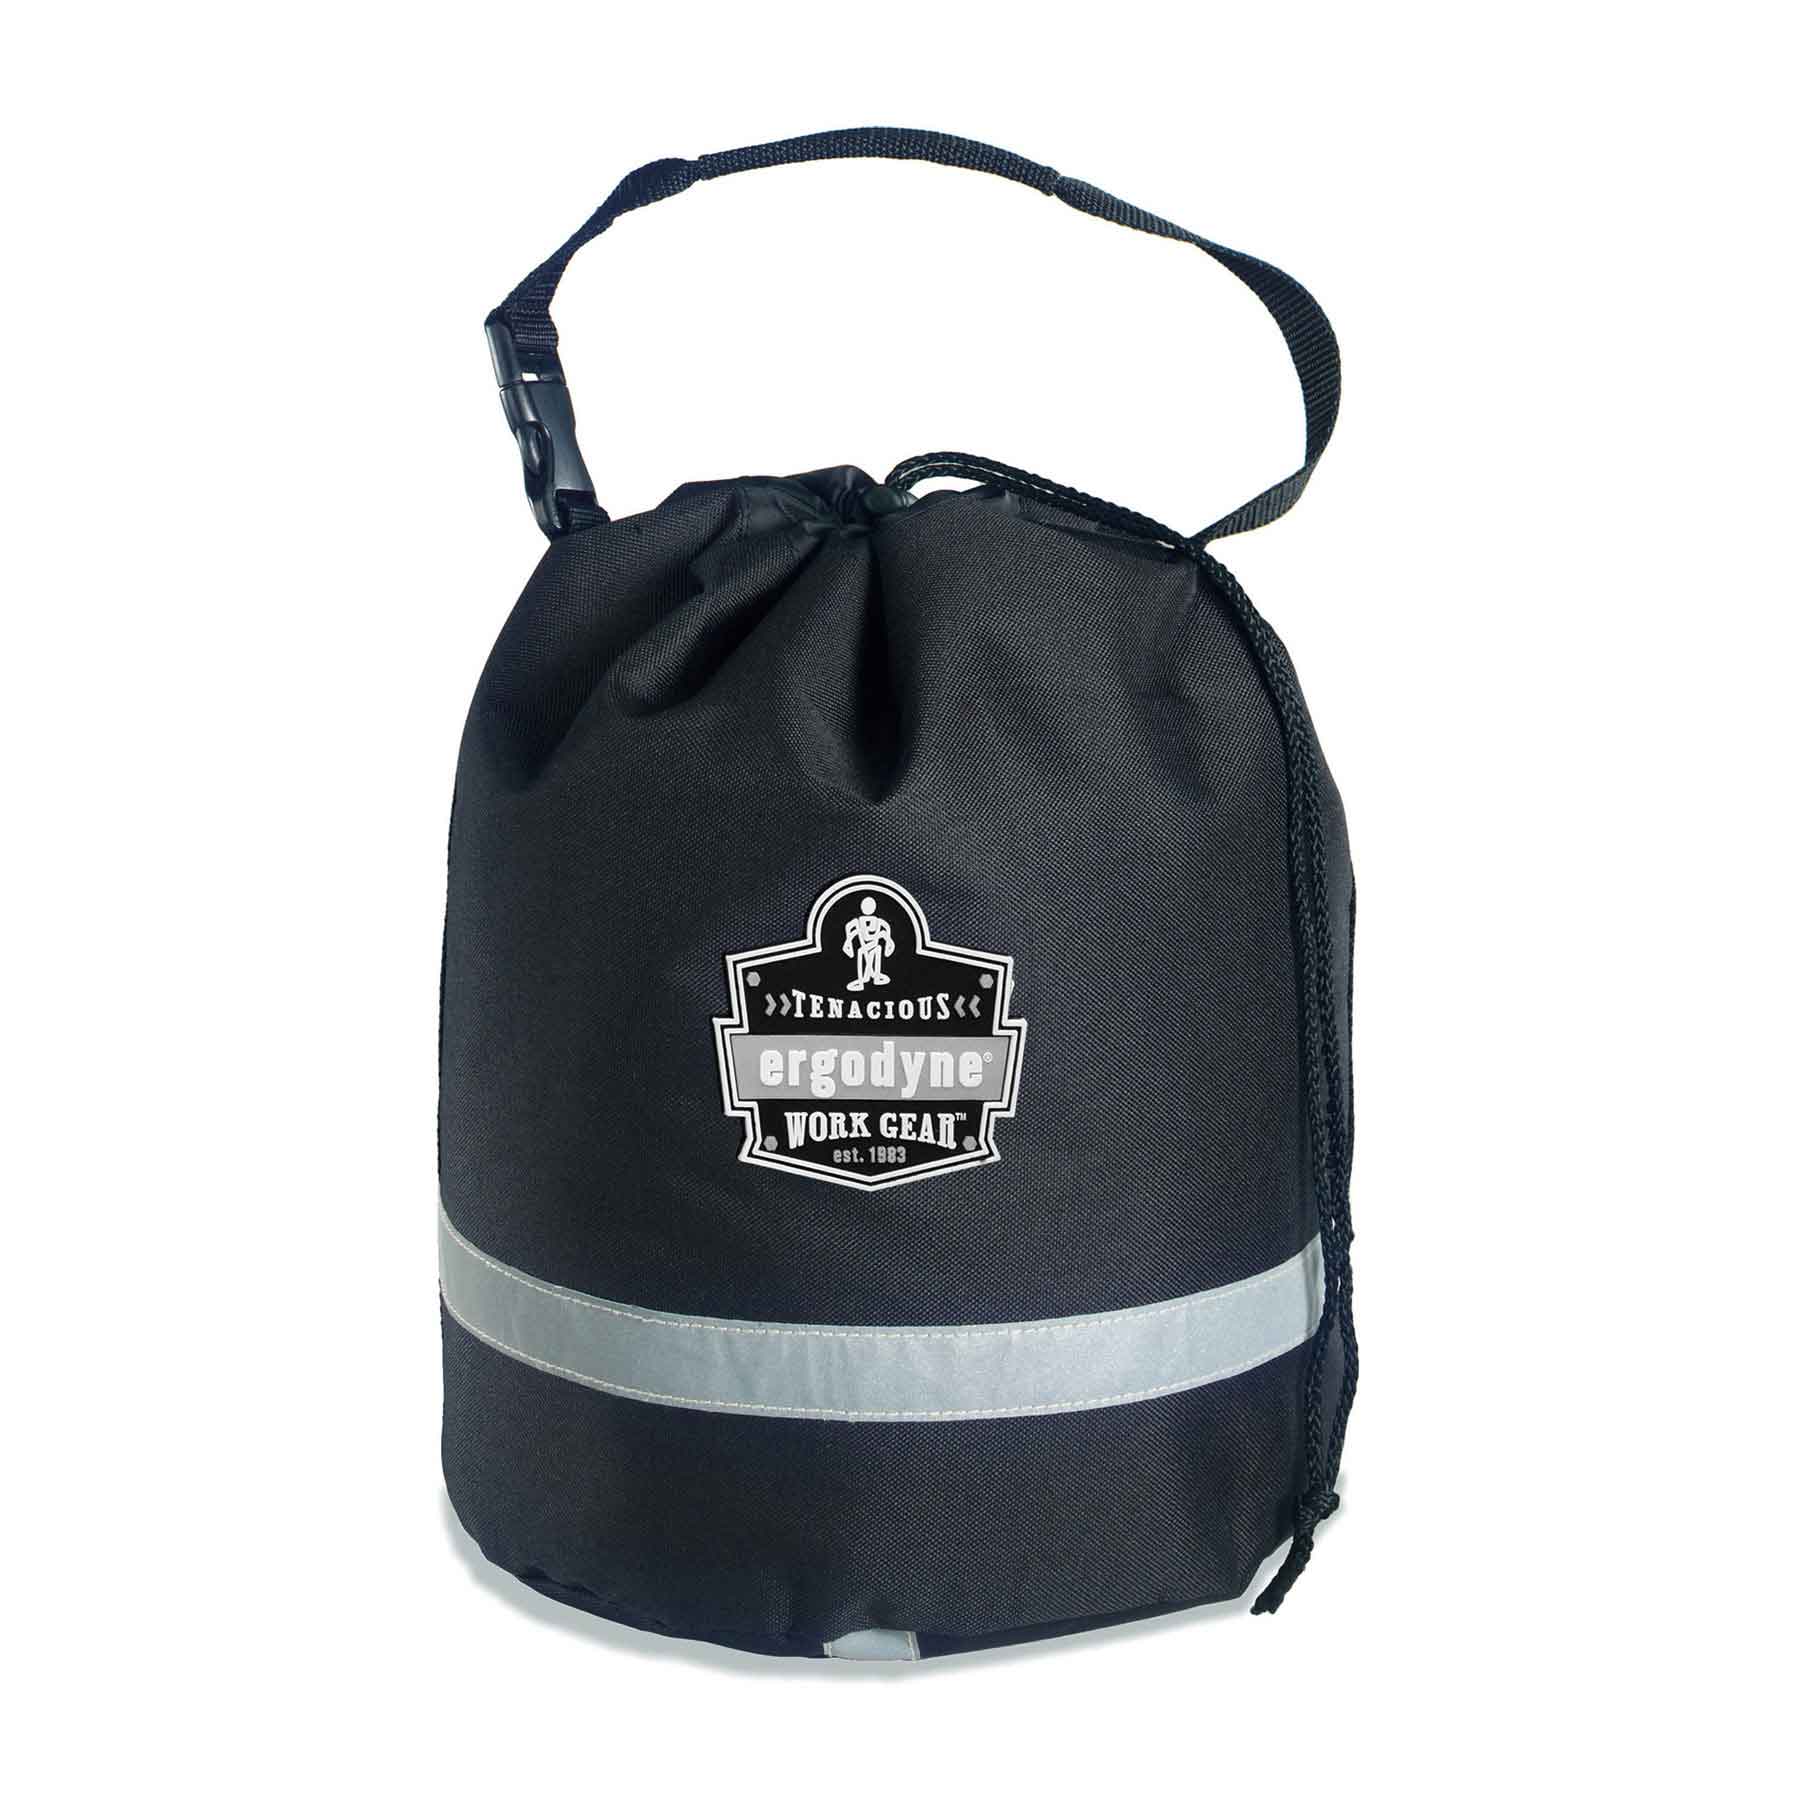 ERGODYNE-Arsenal?? 5130 Fall Protection Gear Bag